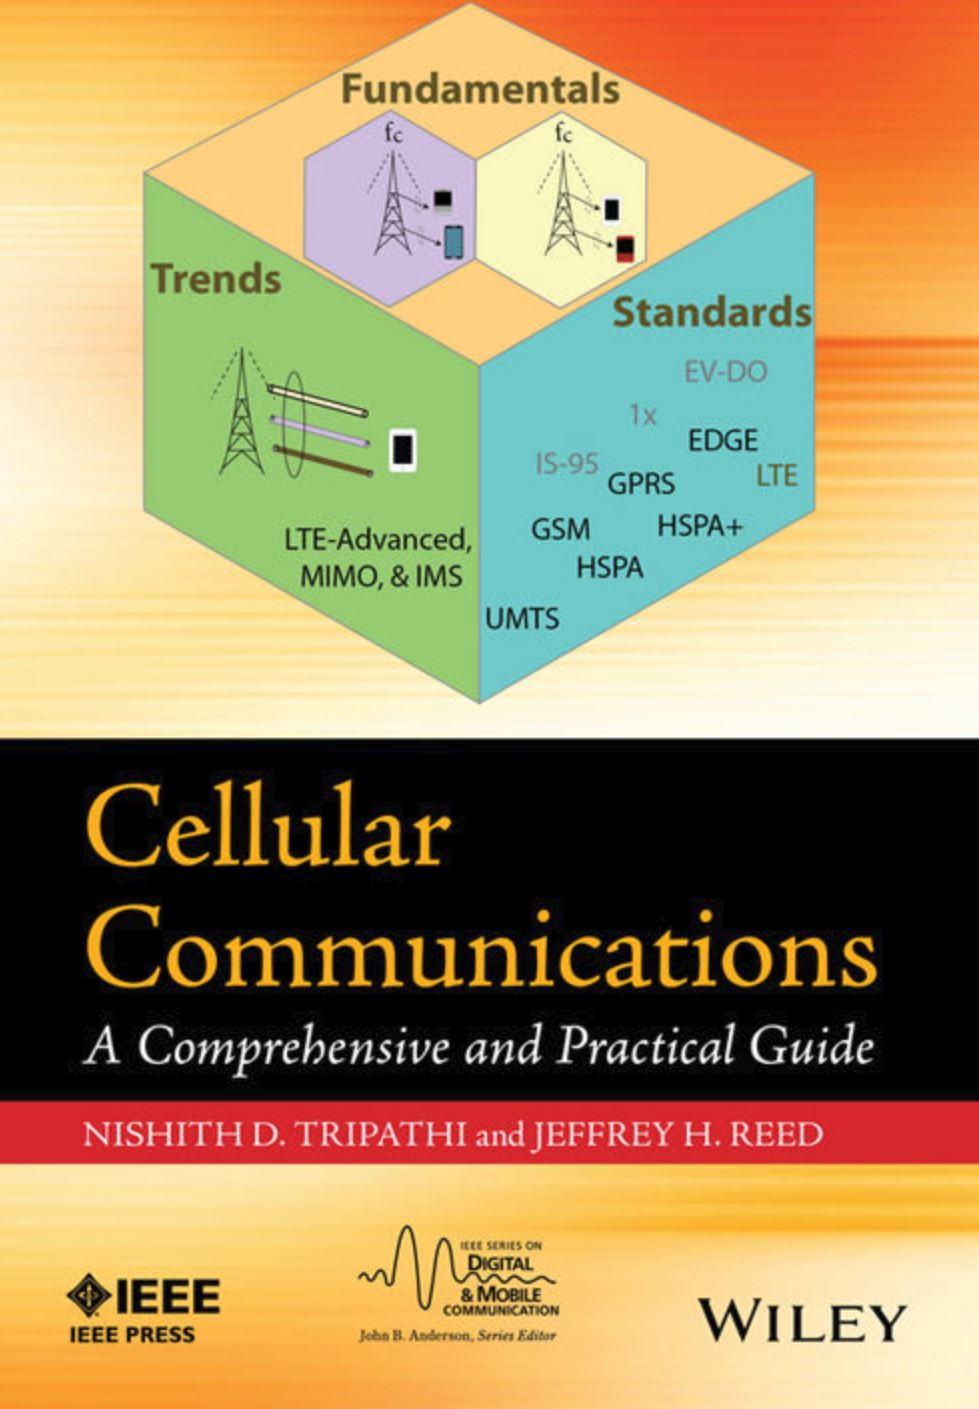 case study on wireless communication